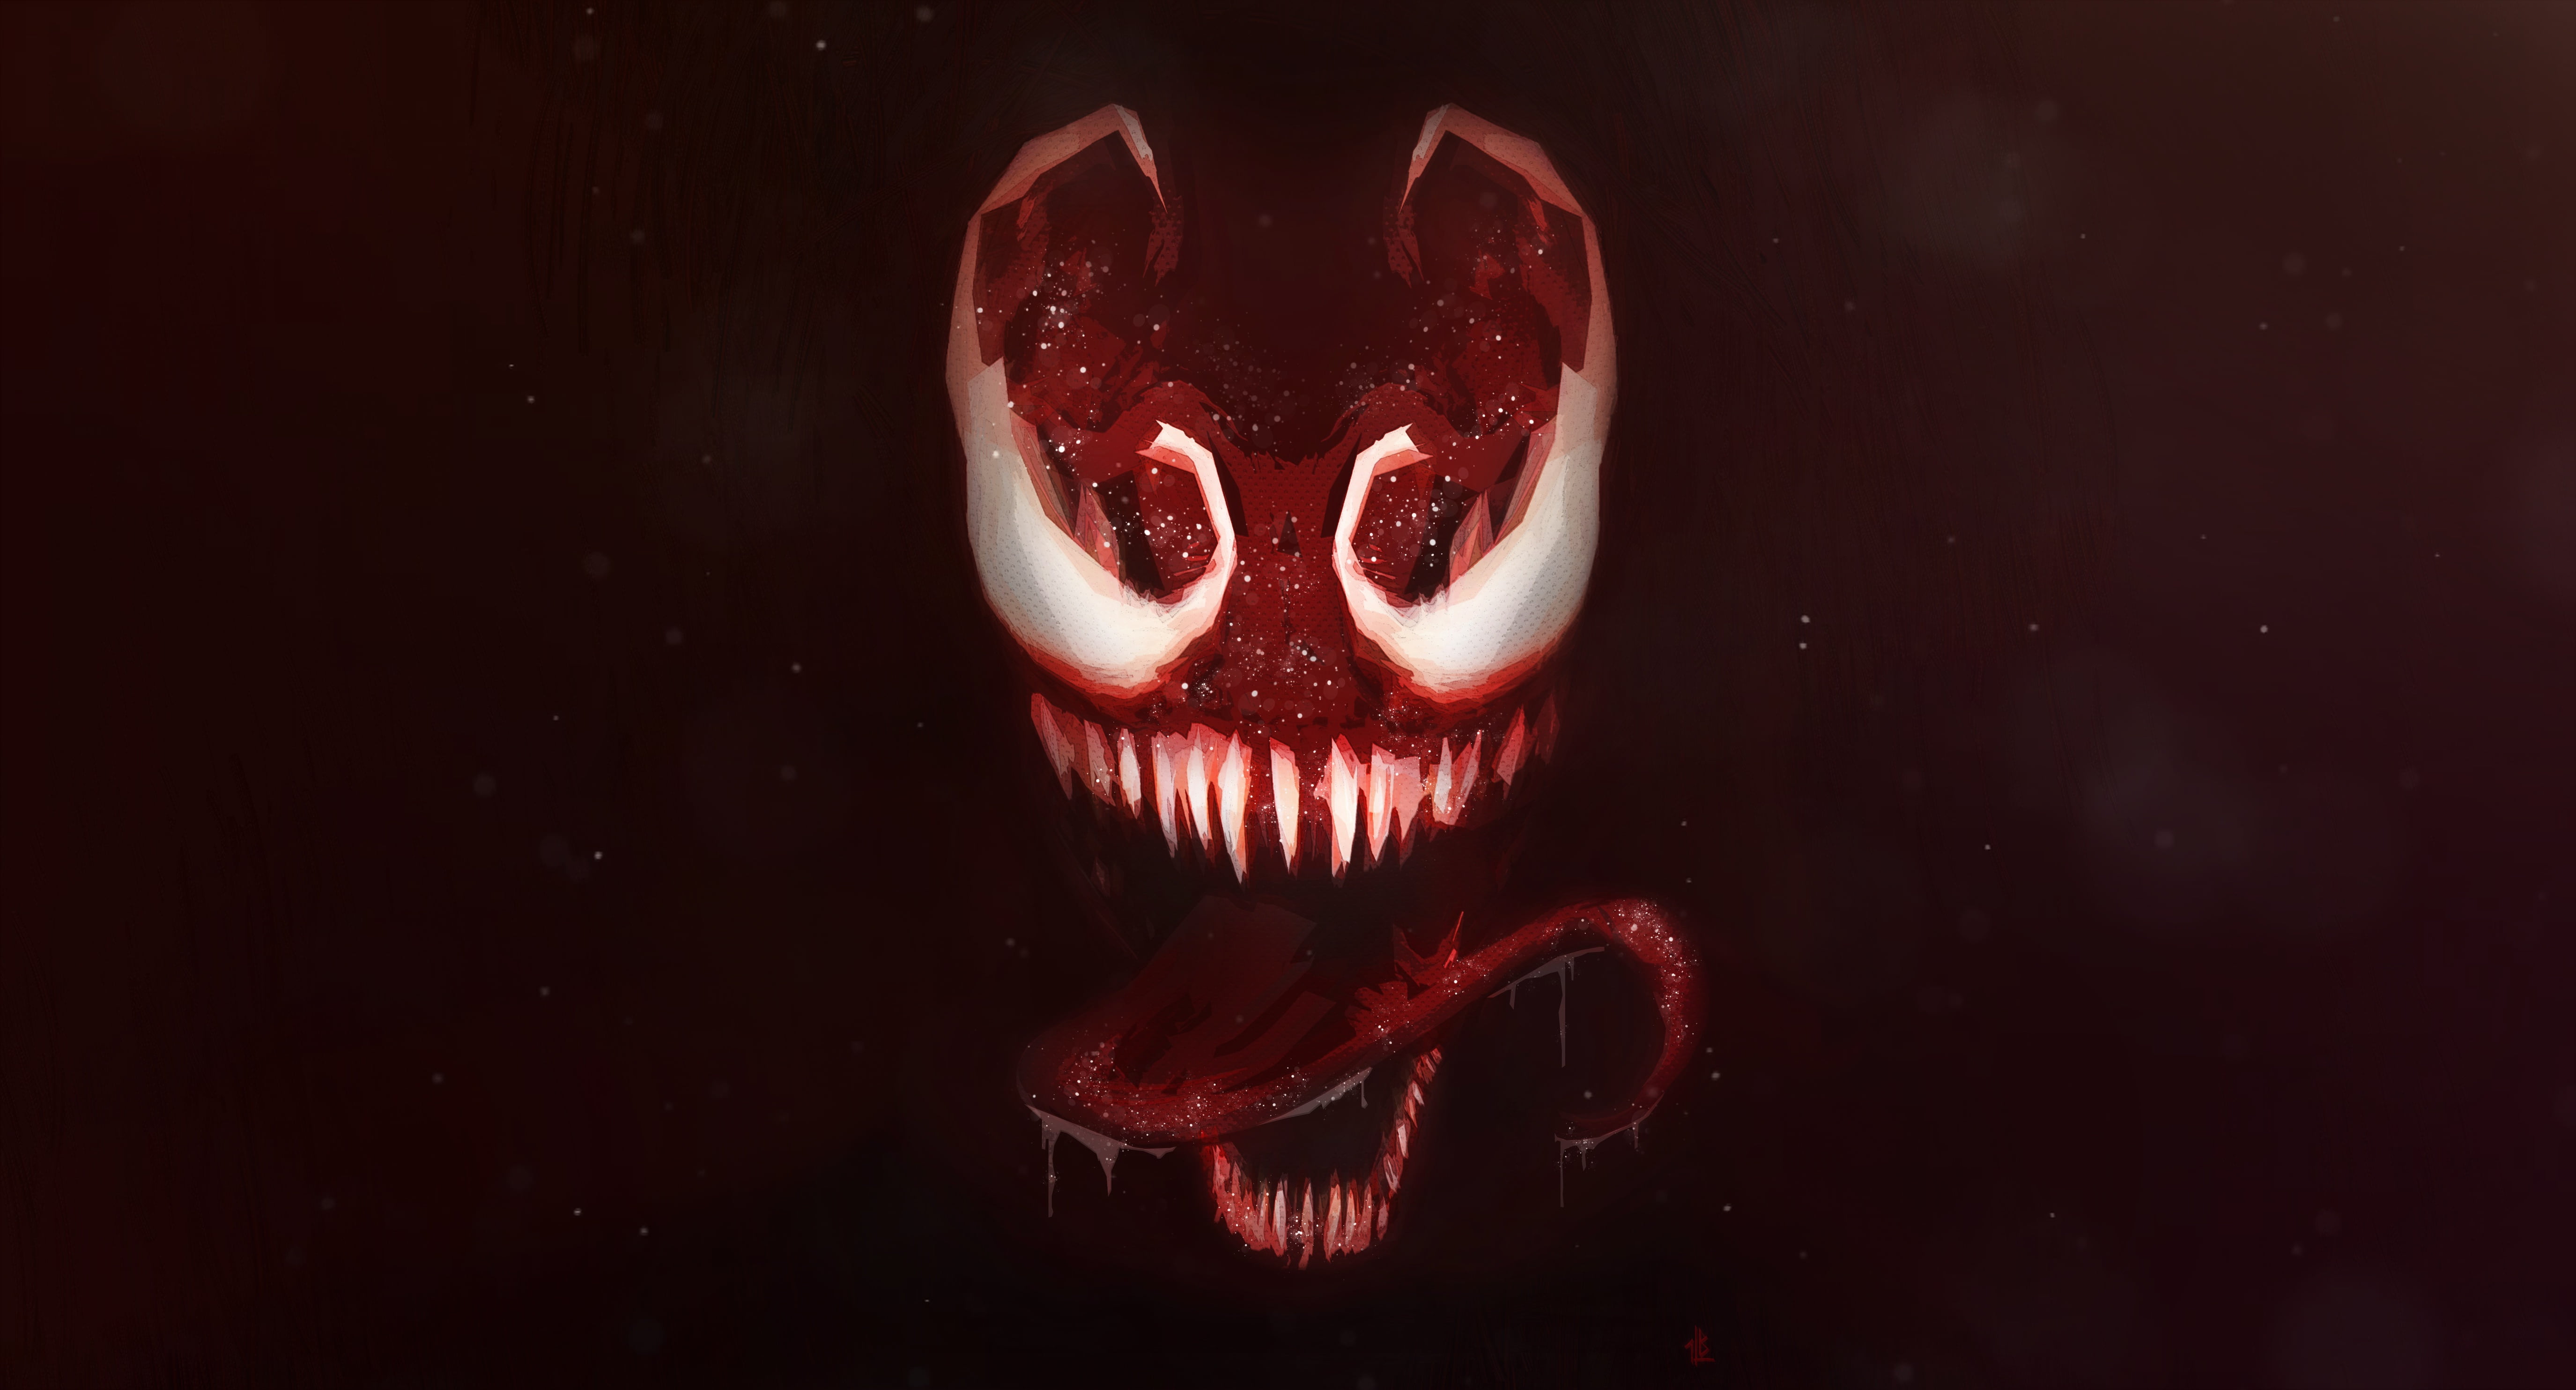 Venom graphic, artwork, tongue out, saliva trail, Spider-Man